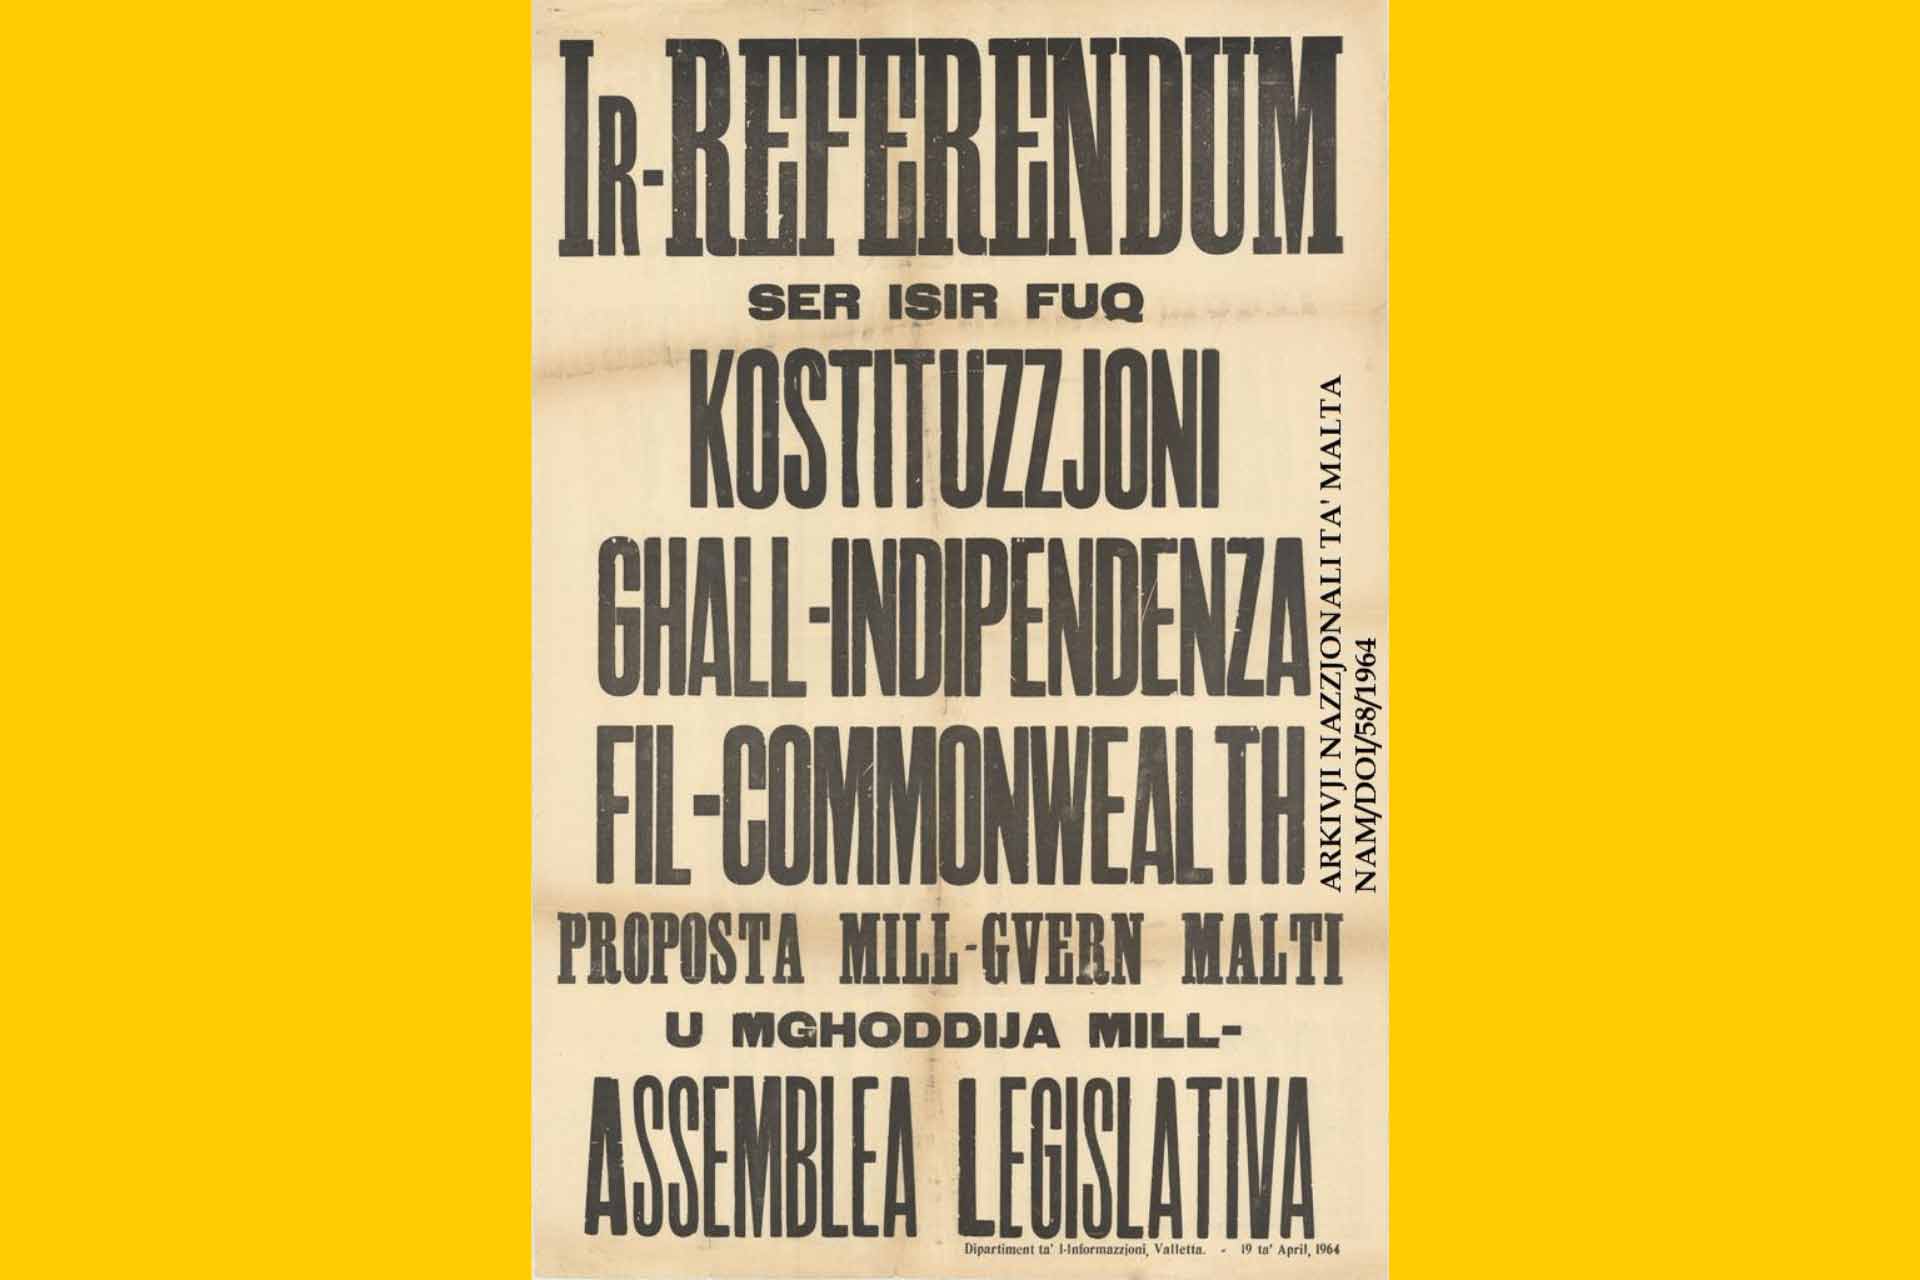 poster 1964 constitutional referendum national assembly malta